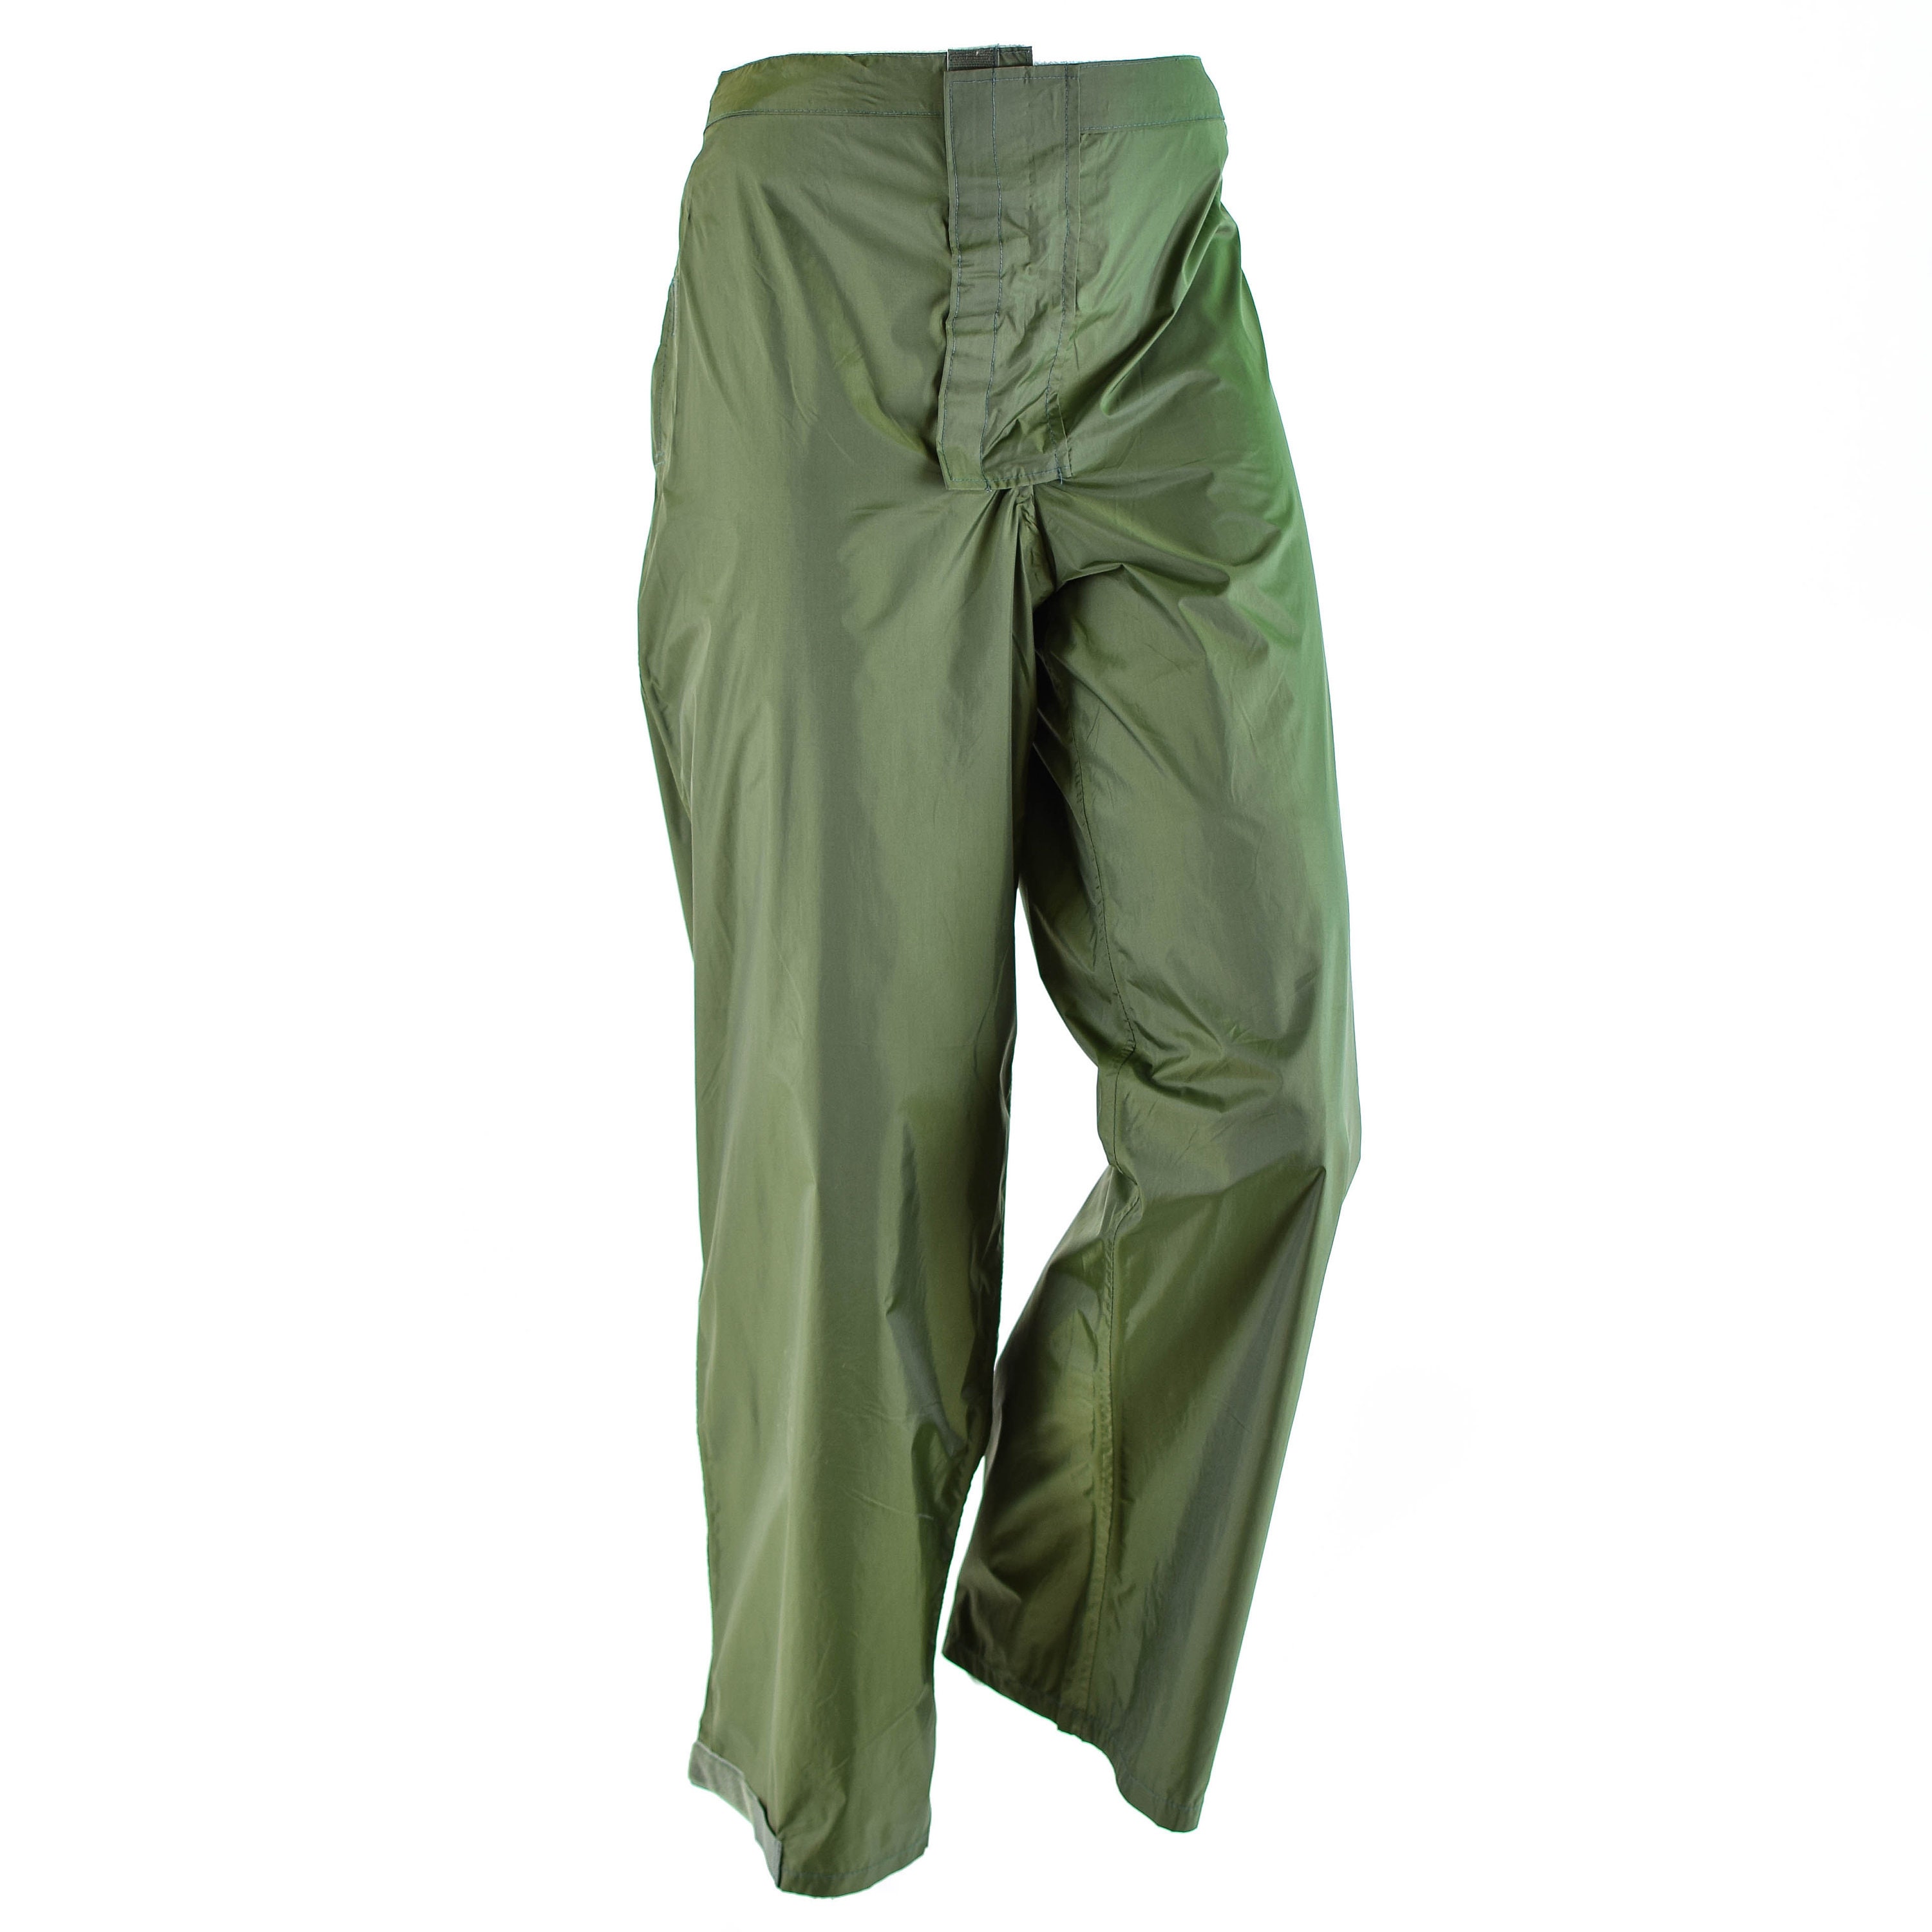 Genuine Danish army O.D wet weather pants waterproof rain trousers ...